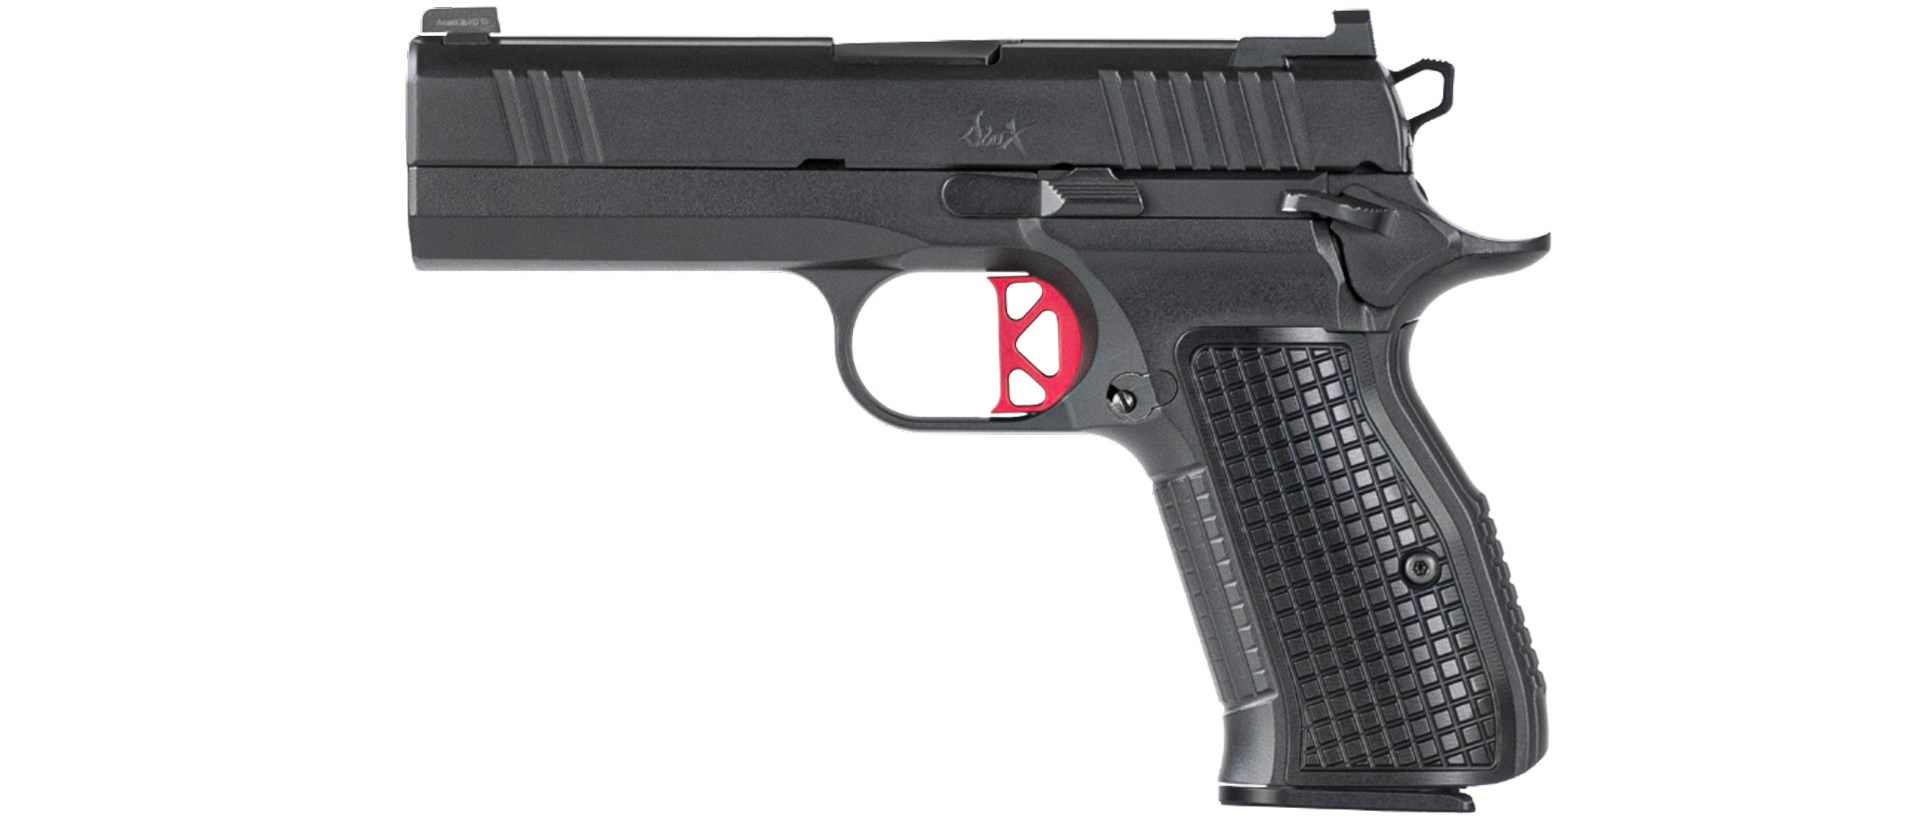 Dan Wesson Firearms DWX Compact pistol black 9 mm gun left-side view red trigger